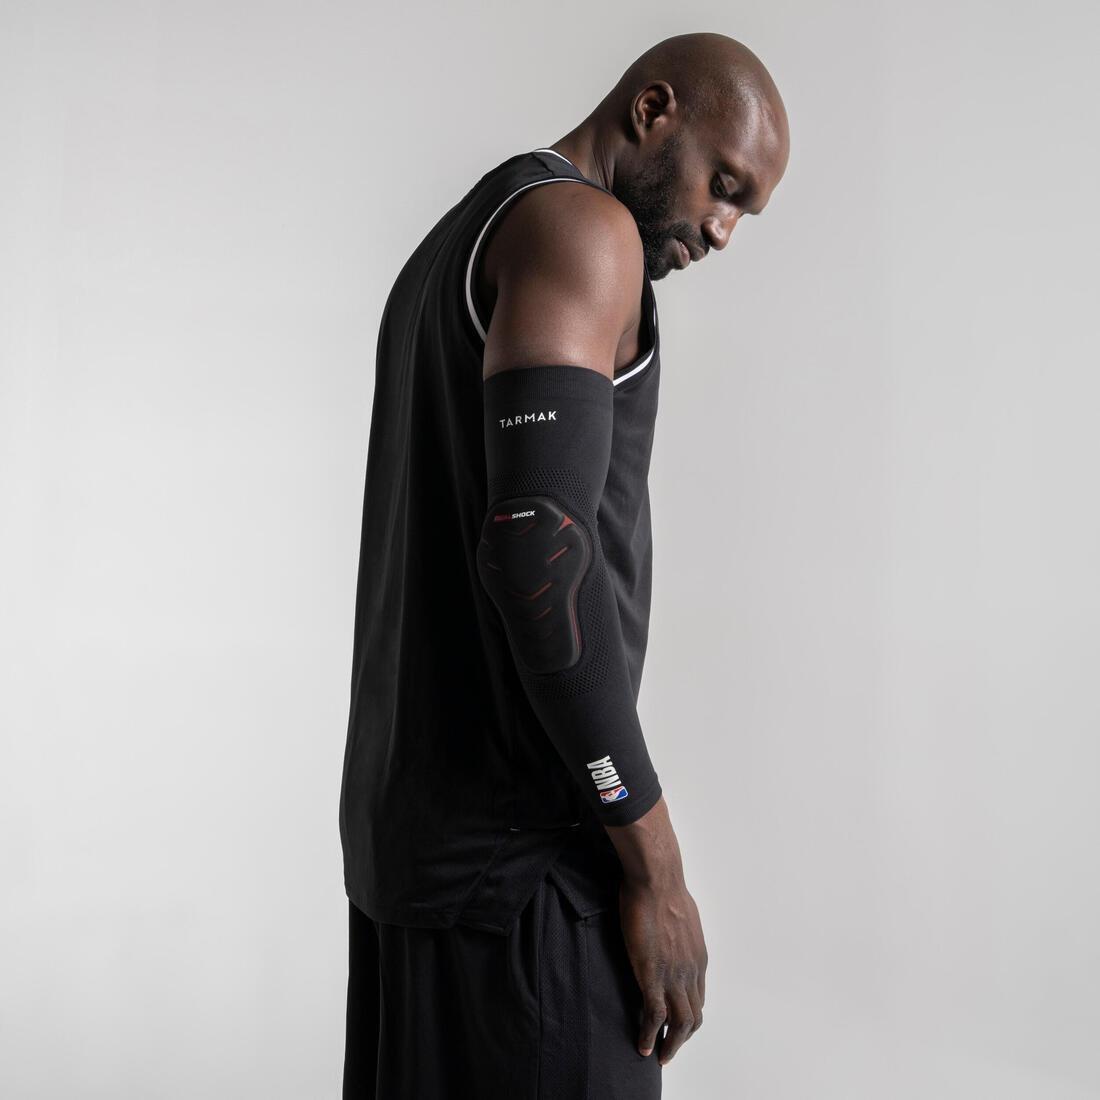 TARMAK Adult Protective Basketball Arm Sleeve - Dualshock, Black